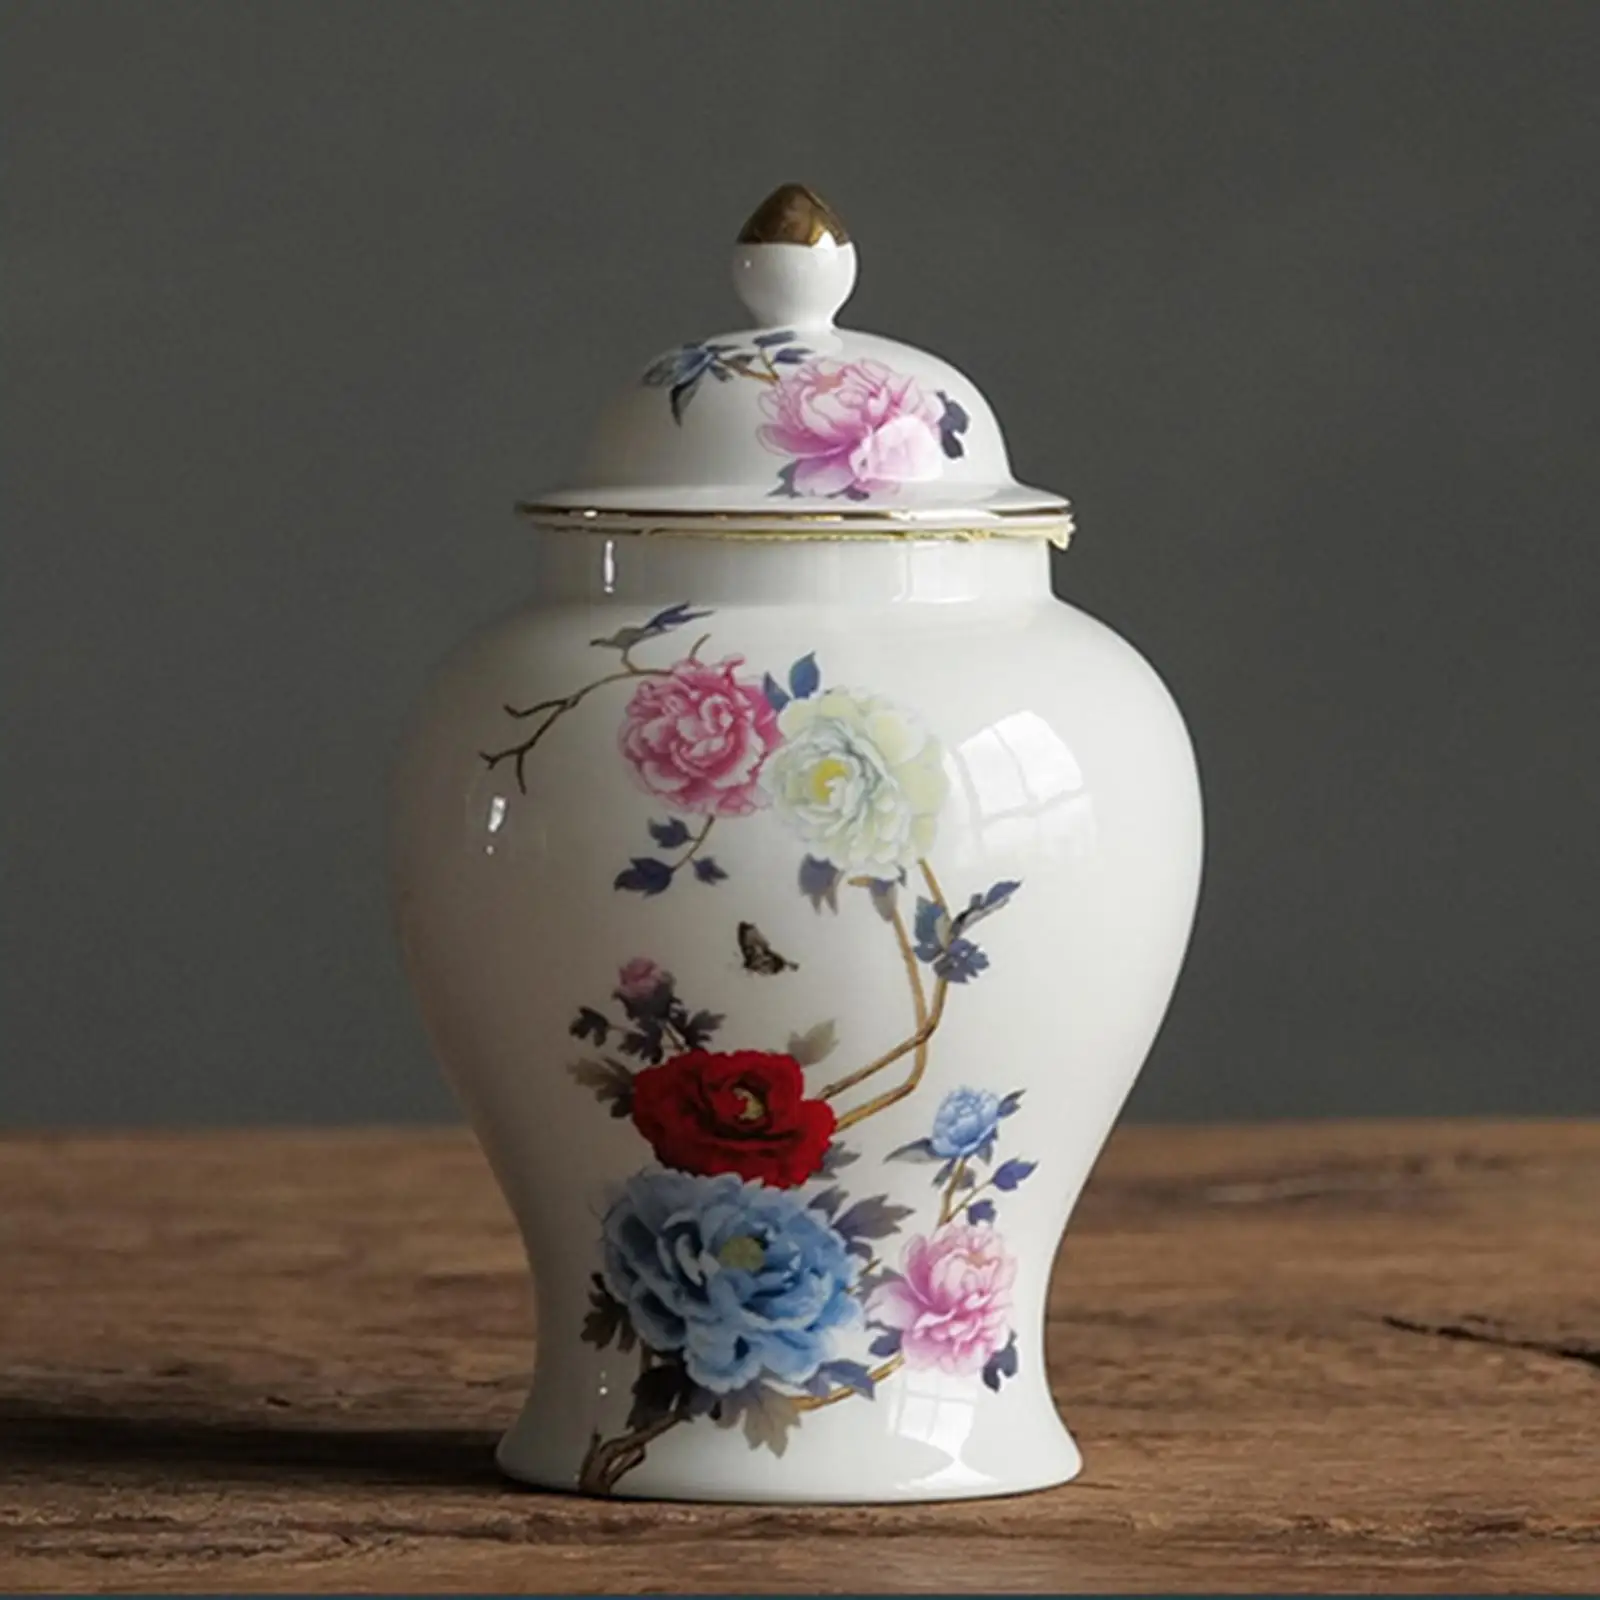 Chinese Style Ceramic Bud Vase Decor Centerpiece Beautiful Asian Decor Dried